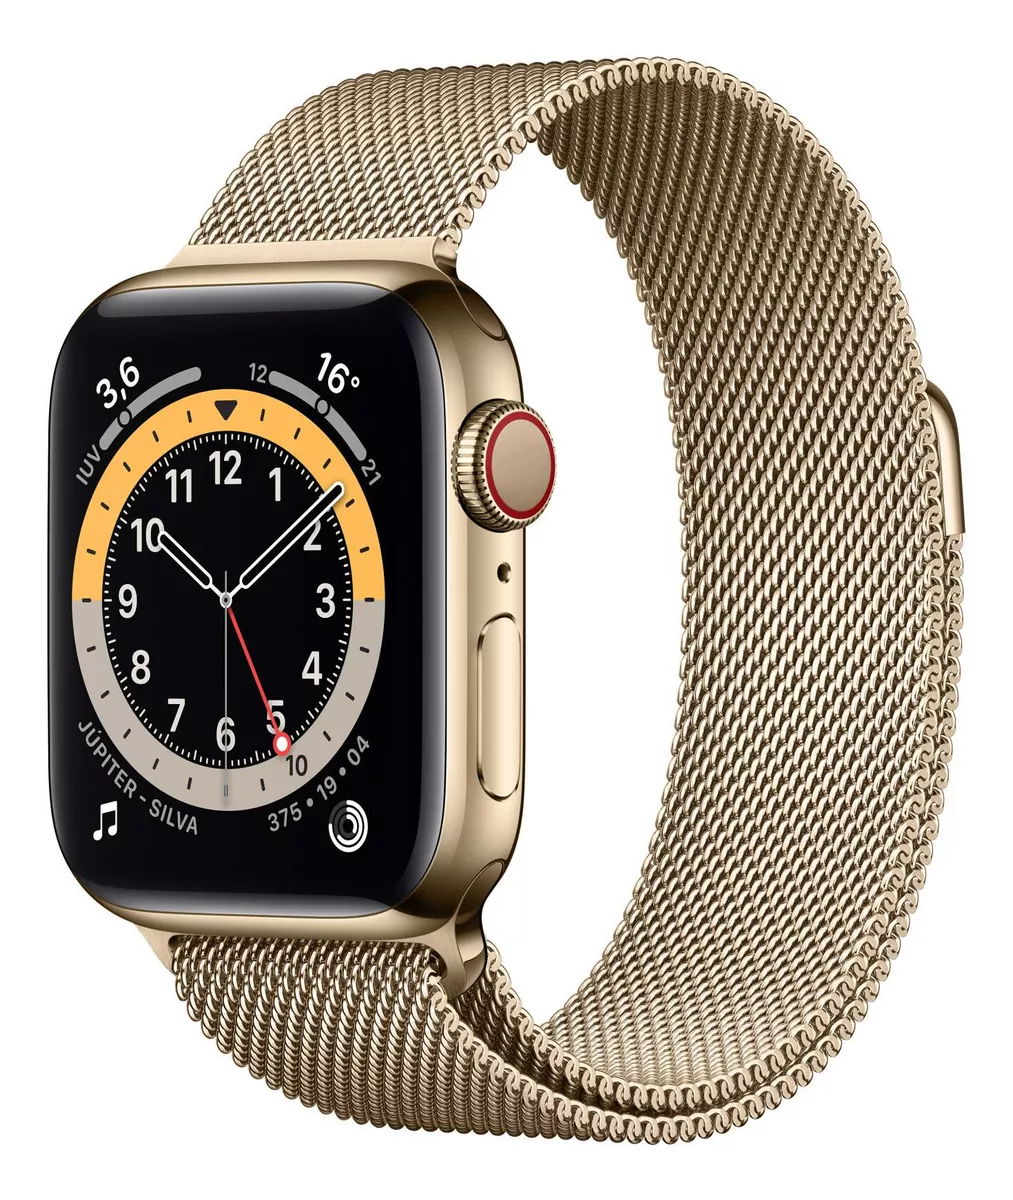 Apple Watch  Series 6 (gps+cellular) - Caixa De Aço Inoxidável Dourado De 40 Mm - Pulseira Estilo Milanês Dourado